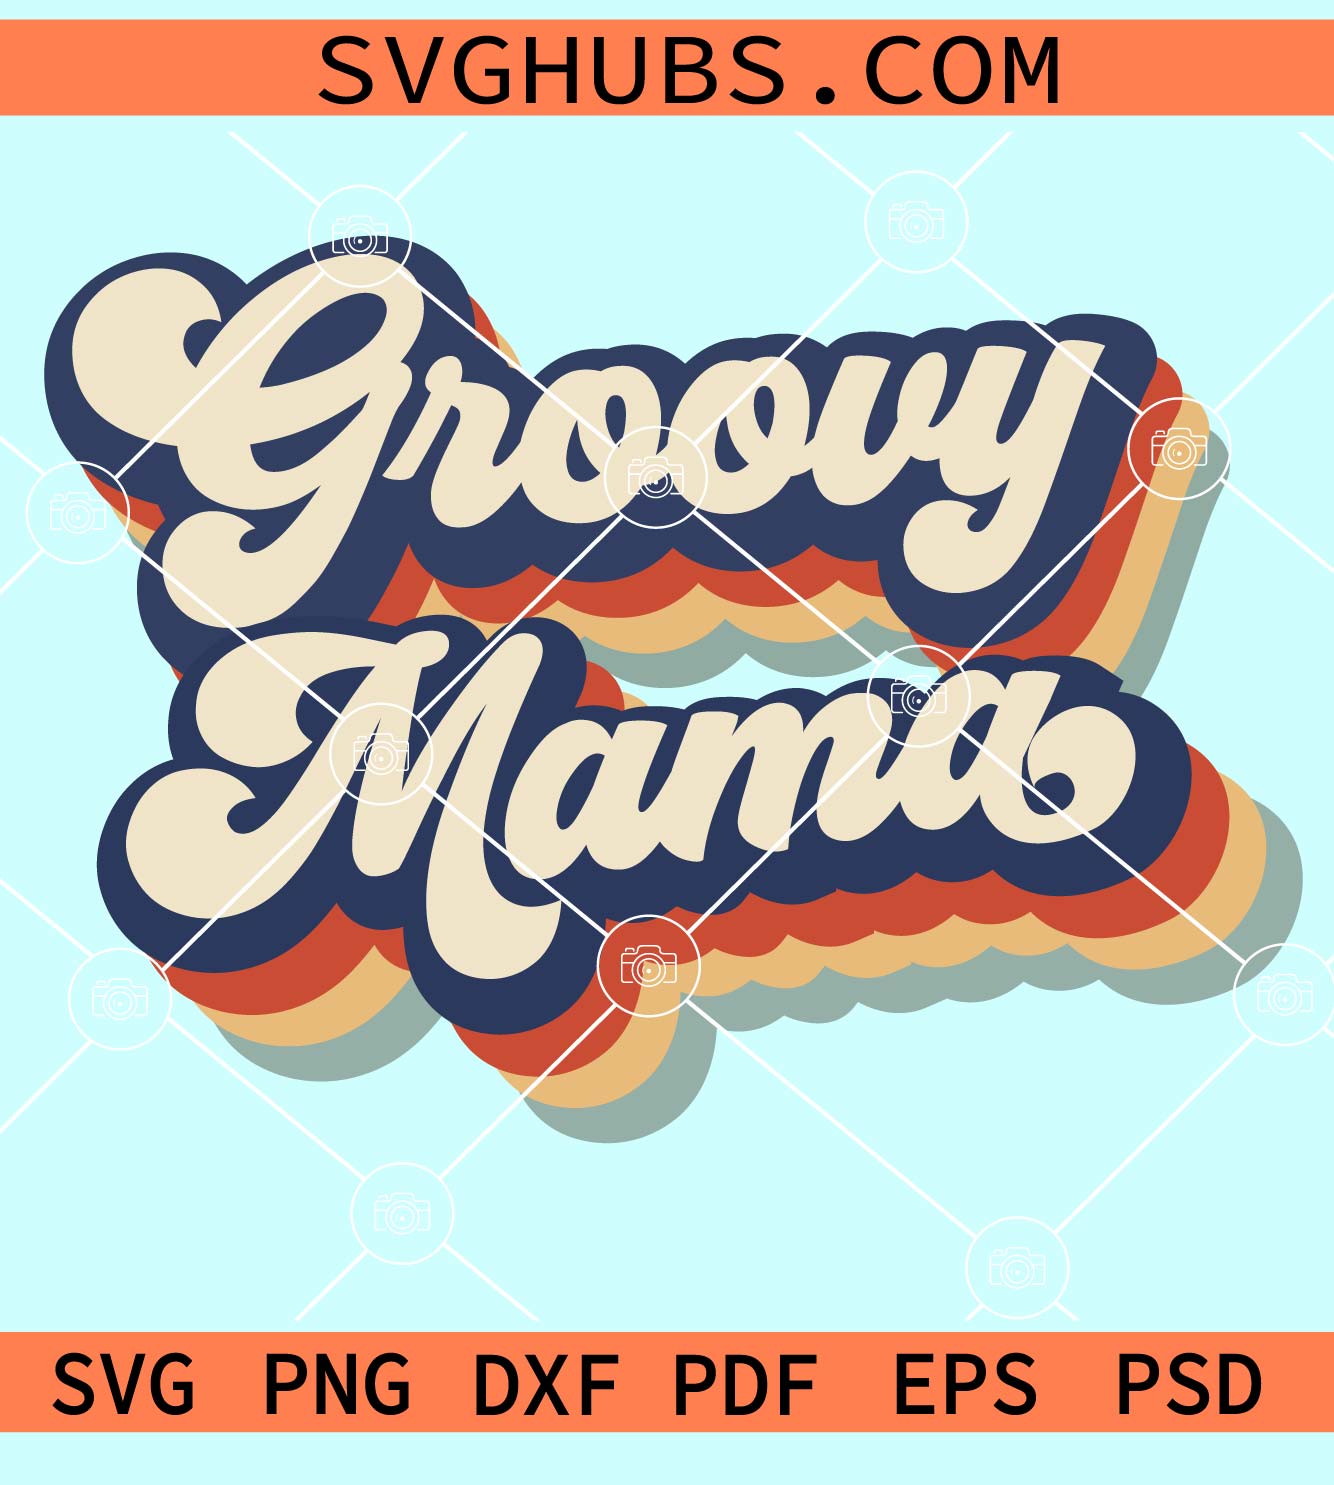 Retro Groovy SVG